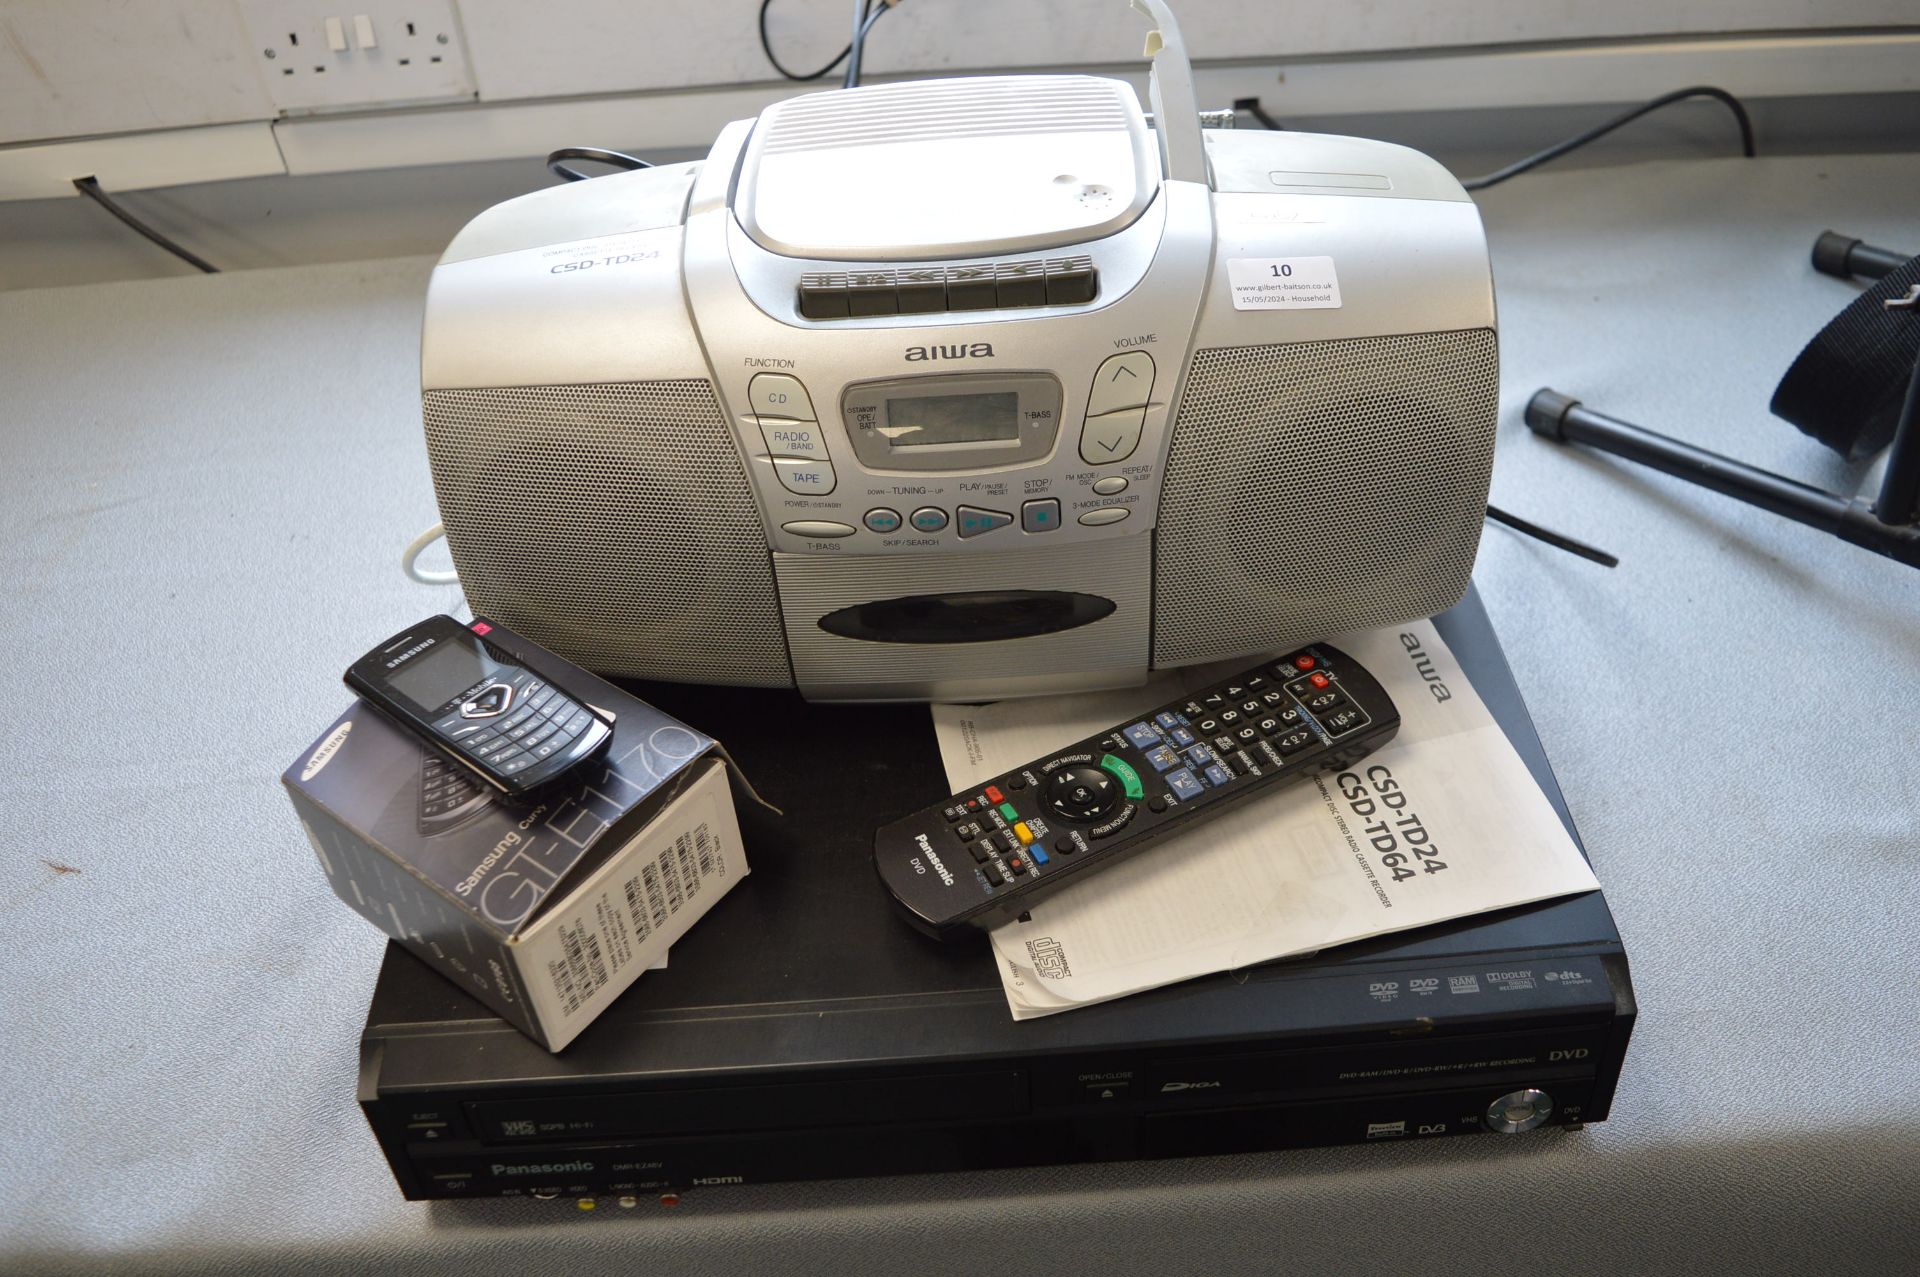 Panasonic DVD/VHS Player, Samsung Mobile Phone, an